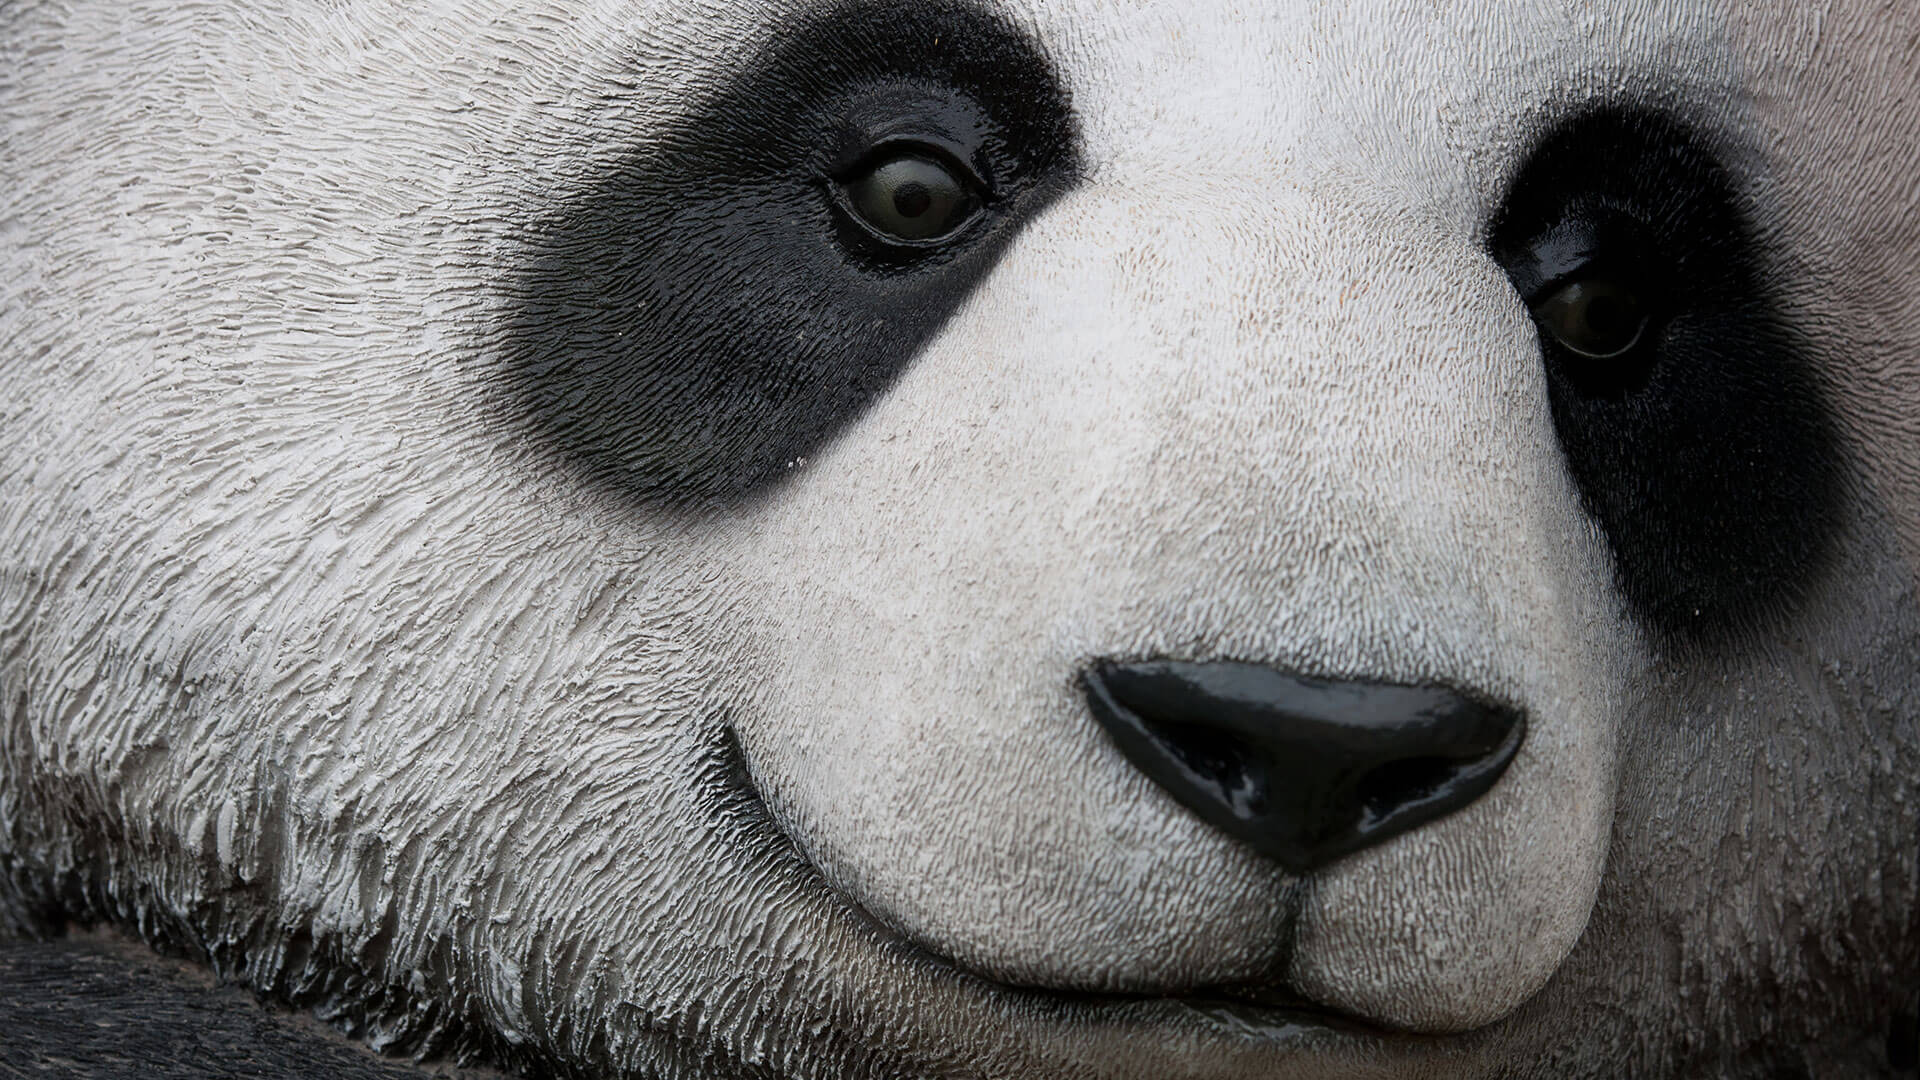 Panda Face Ss Up Picture Of Panda